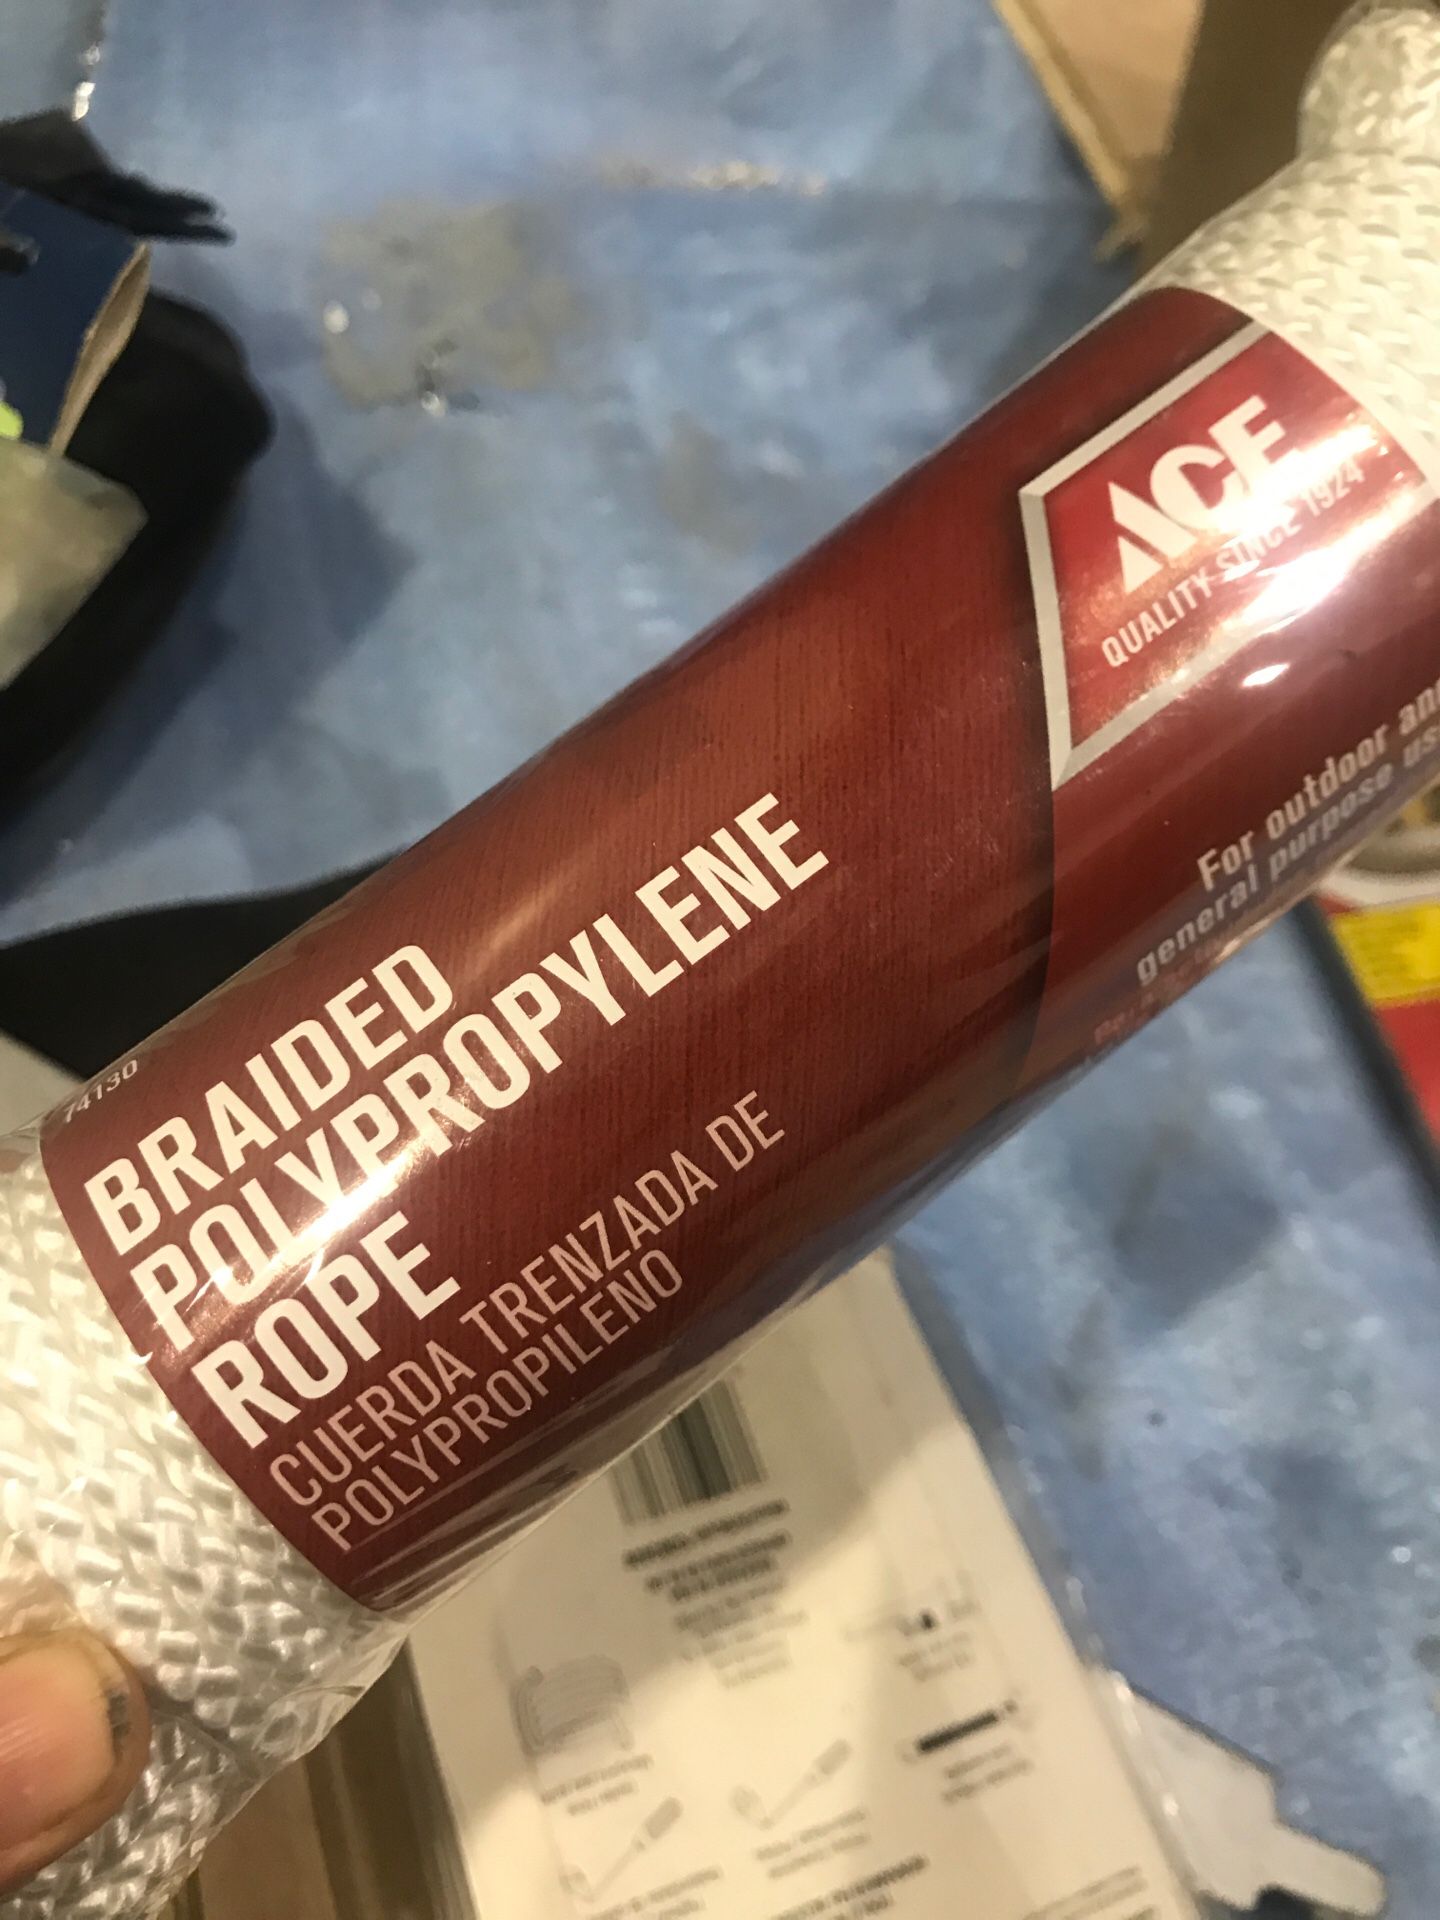 Braided polypropylene rope